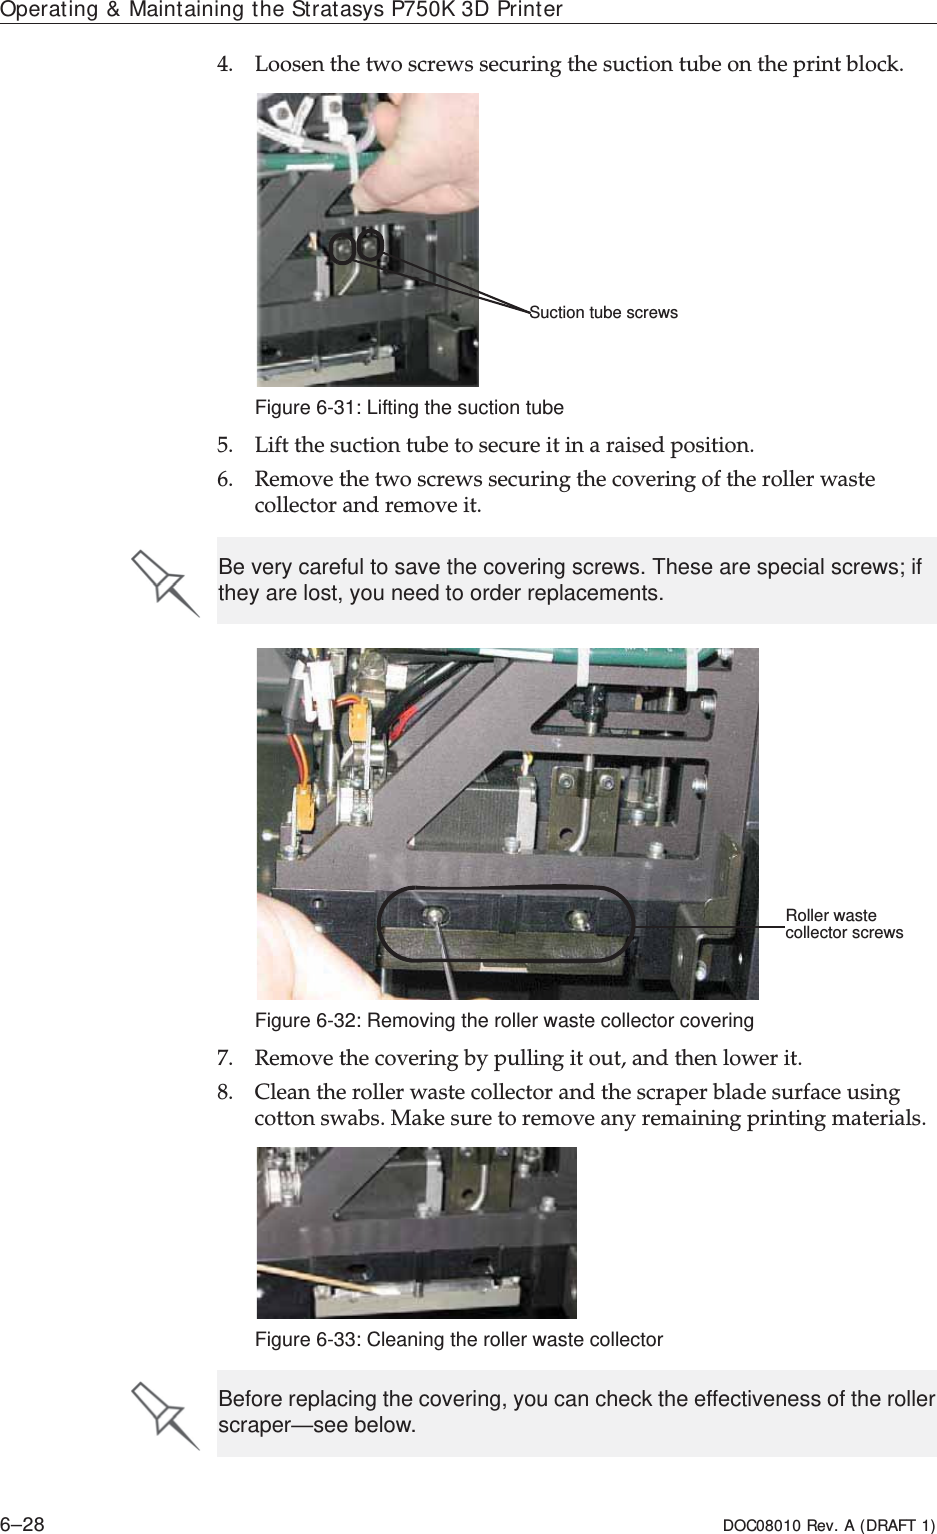 Operating &amp; Maintaining the Stratasys P750K 3D Printer6–28 DOC08010 Rev. A (DRAFT 1)4. Loosenȱtheȱtwoȱscrewsȱsecuringȱtheȱsuctionȱtubeȱonȱtheȱprintȱblock.Figure 6-31: Lifting the suction tube5. Liftȱtheȱsuctionȱtubeȱtoȱsecureȱitȱinȱaȱraisedȱposition.6. Removeȱtheȱtwoȱscrewsȱsecuringȱtheȱcoveringȱofȱtheȱrollerȱwasteȱcollectorȱandȱremoveȱit.Figure 6-32: Removing the roller waste collector covering7. Removeȱtheȱcoveringȱbyȱpullingȱitȱout,ȱandȱthenȱlowerȱit.8. Cleanȱtheȱrollerȱwasteȱcollectorȱandȱtheȱscraperȱbladeȱsurfaceȱusingȱcottonȱswabs.ȱMakeȱsureȱtoȱremoveȱanyȱremainingȱprintingȱmaterials.Figure 6-33: Cleaning the roller waste collectorSuction tube screwsBe very careful to save the covering screws. These are special screws; if they are lost, you need to order replacements.Roller waste collector screwsBefore replacing the covering, you can check the effectiveness of the roller scraper—see below.